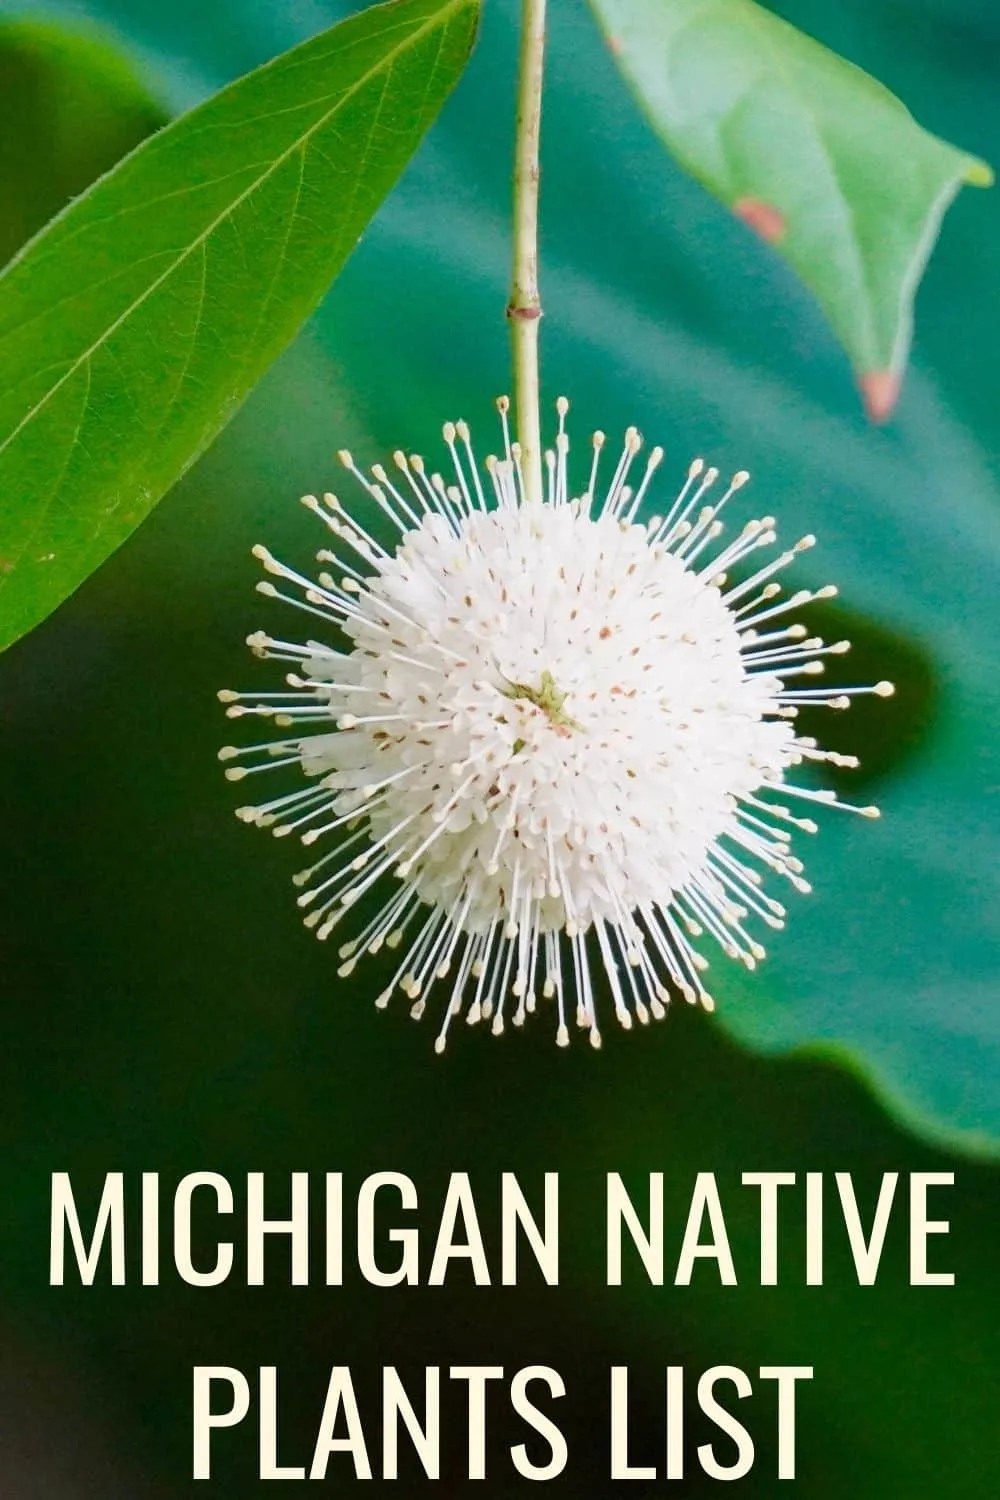 Michigan native plants list